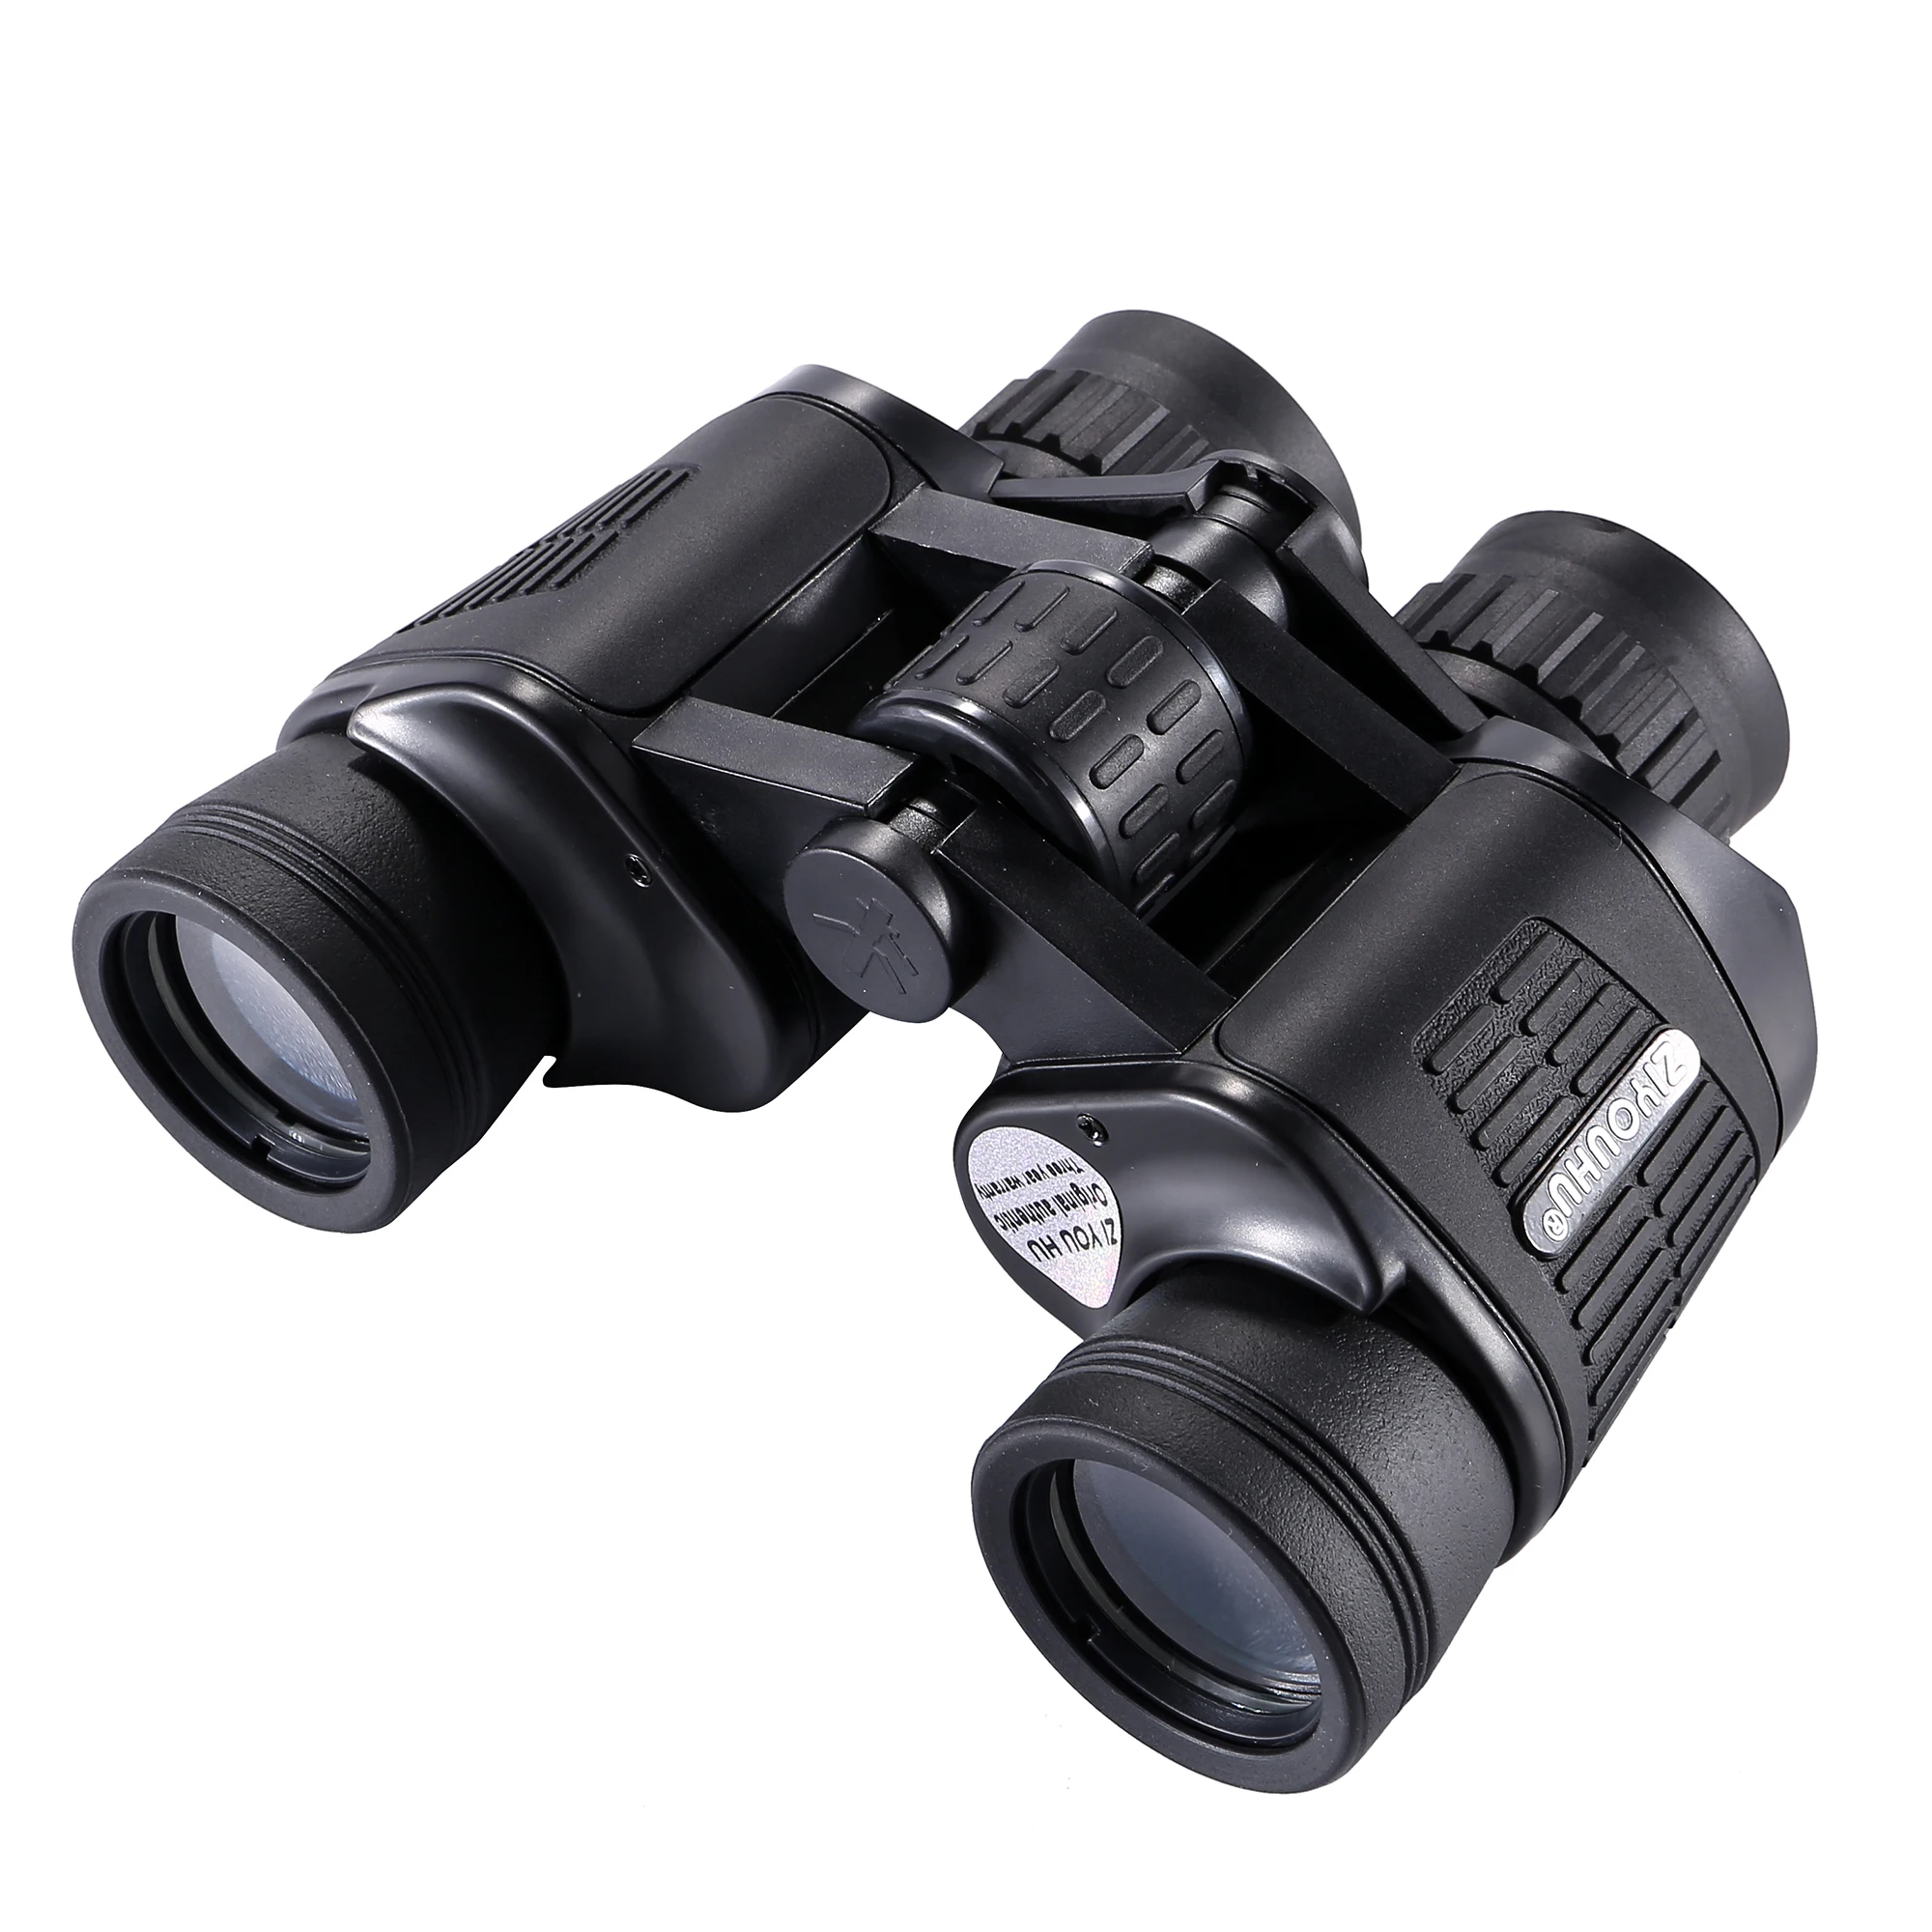 

Outdoor Sports Hunting Optics HD Binoculars 20x50 FMC Porro Prism Powerful Telescope for Bird Watching,Concerts,Hiking,Travel